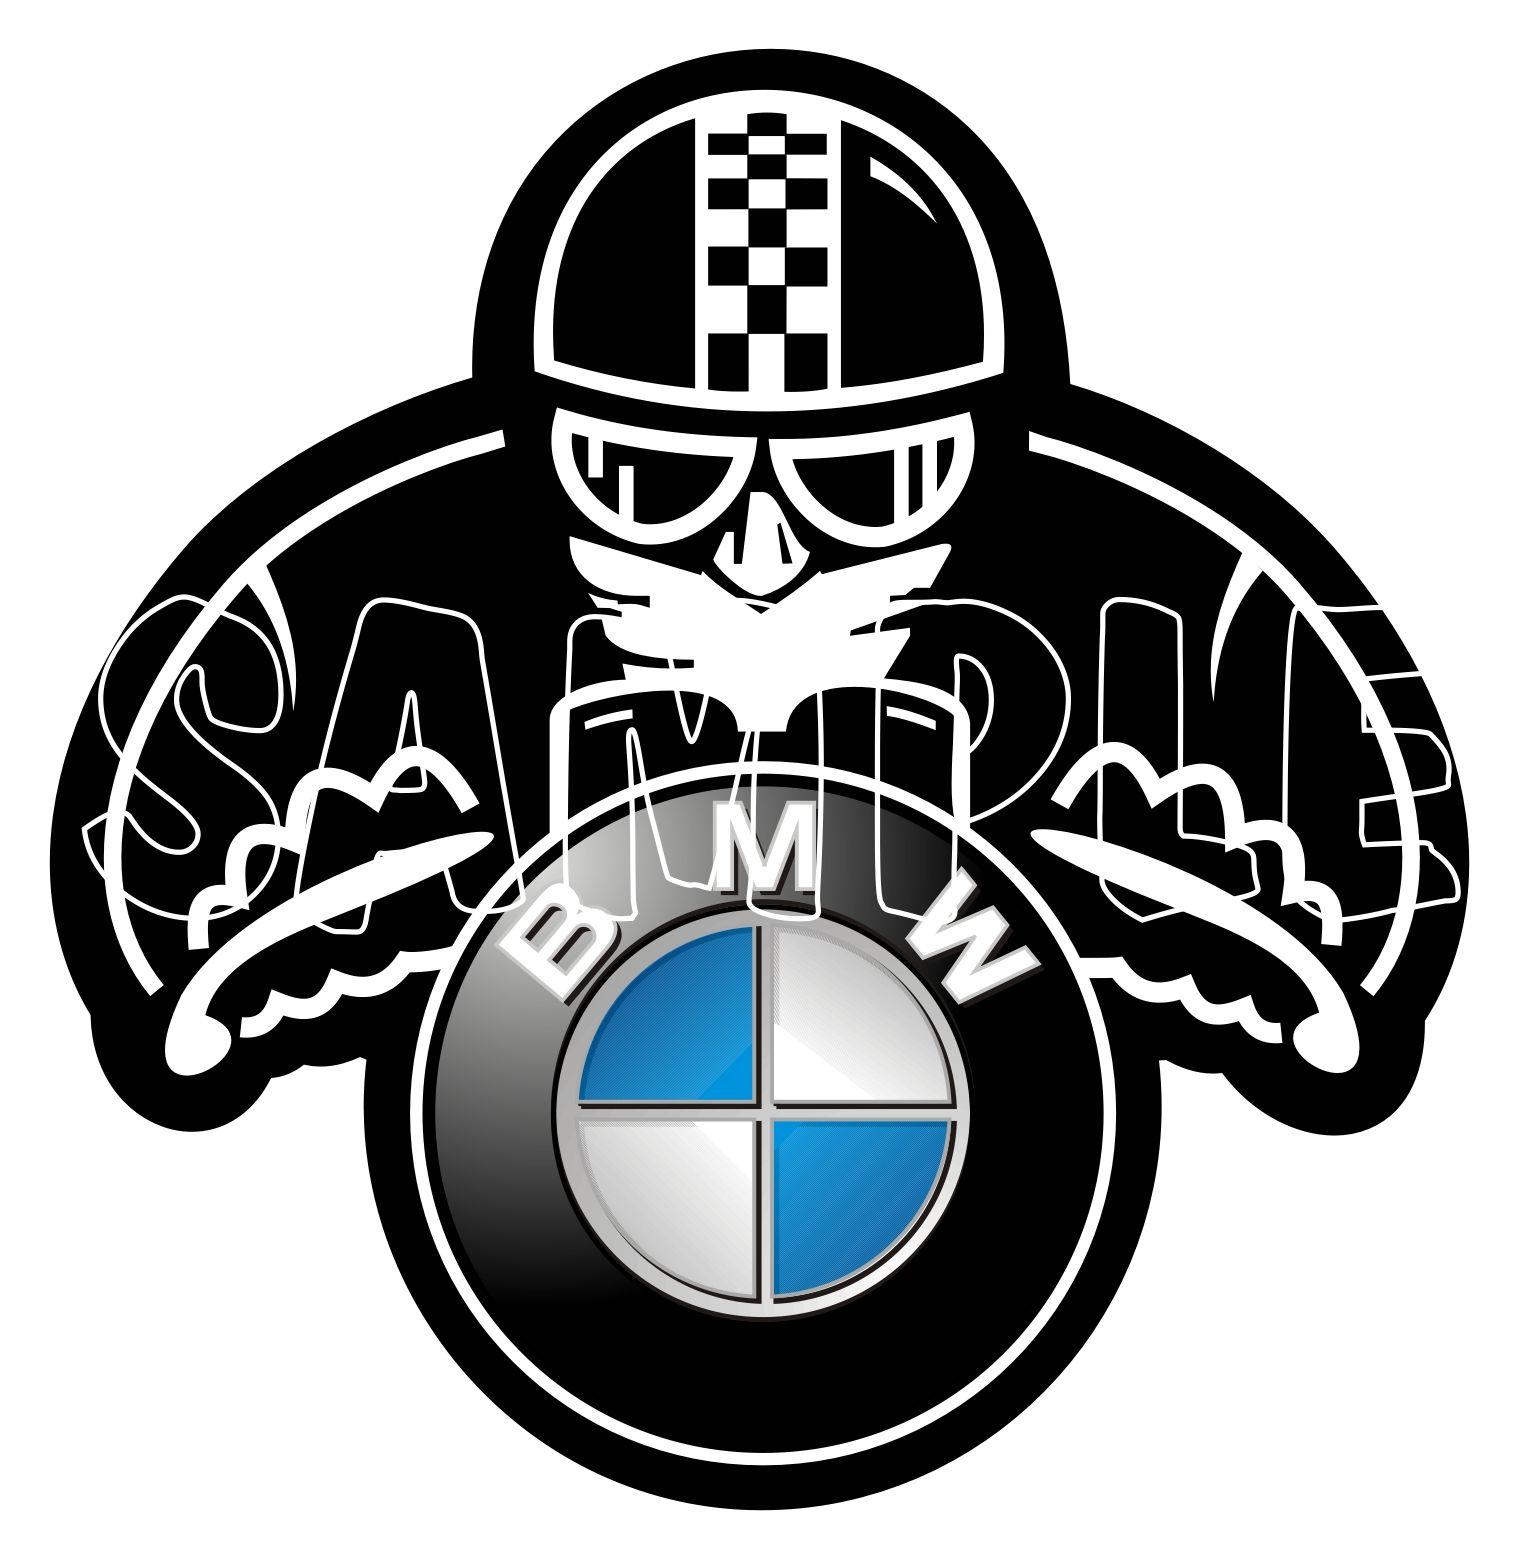 Old BMW Logo - BMW Old School Cafe Racer Sticker